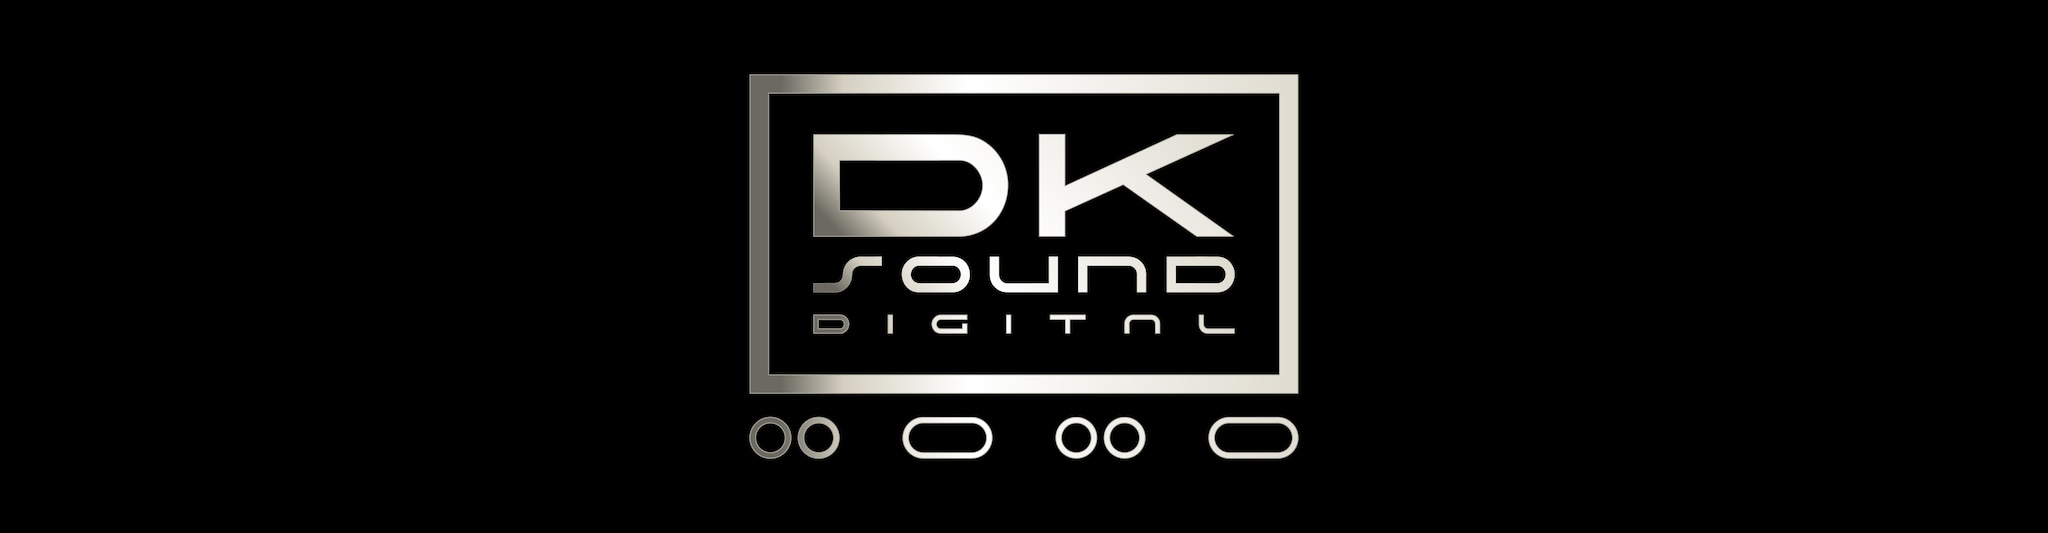 DK SOUND DIGITAL